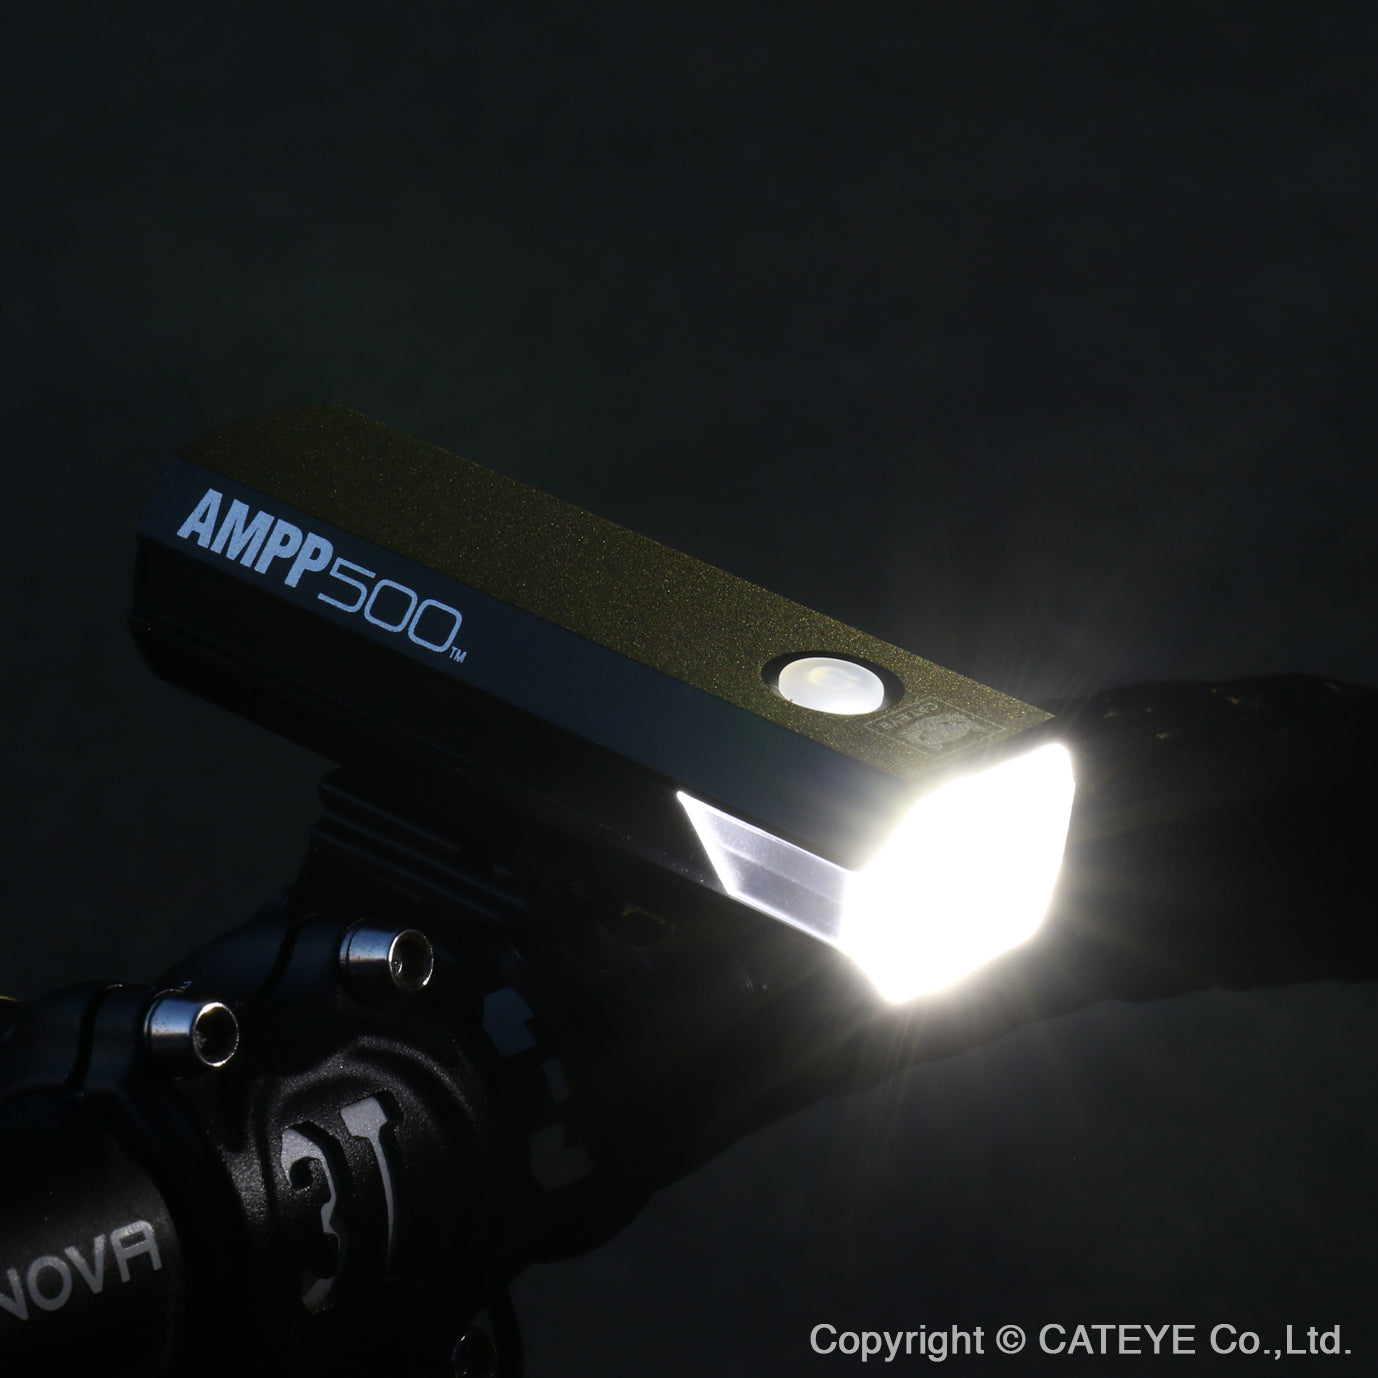 CATEYE USB 叉電前燈~AMPP500~HL-EL085RC/ CATEYE USB RECHARGEABLE FRONT LIGHT~AMPP500~HL-EL085RC